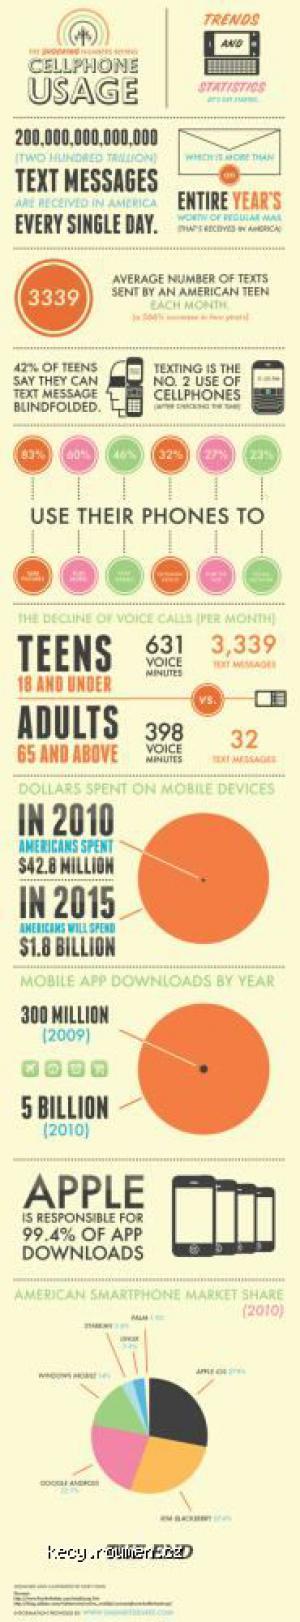 cellphone usage